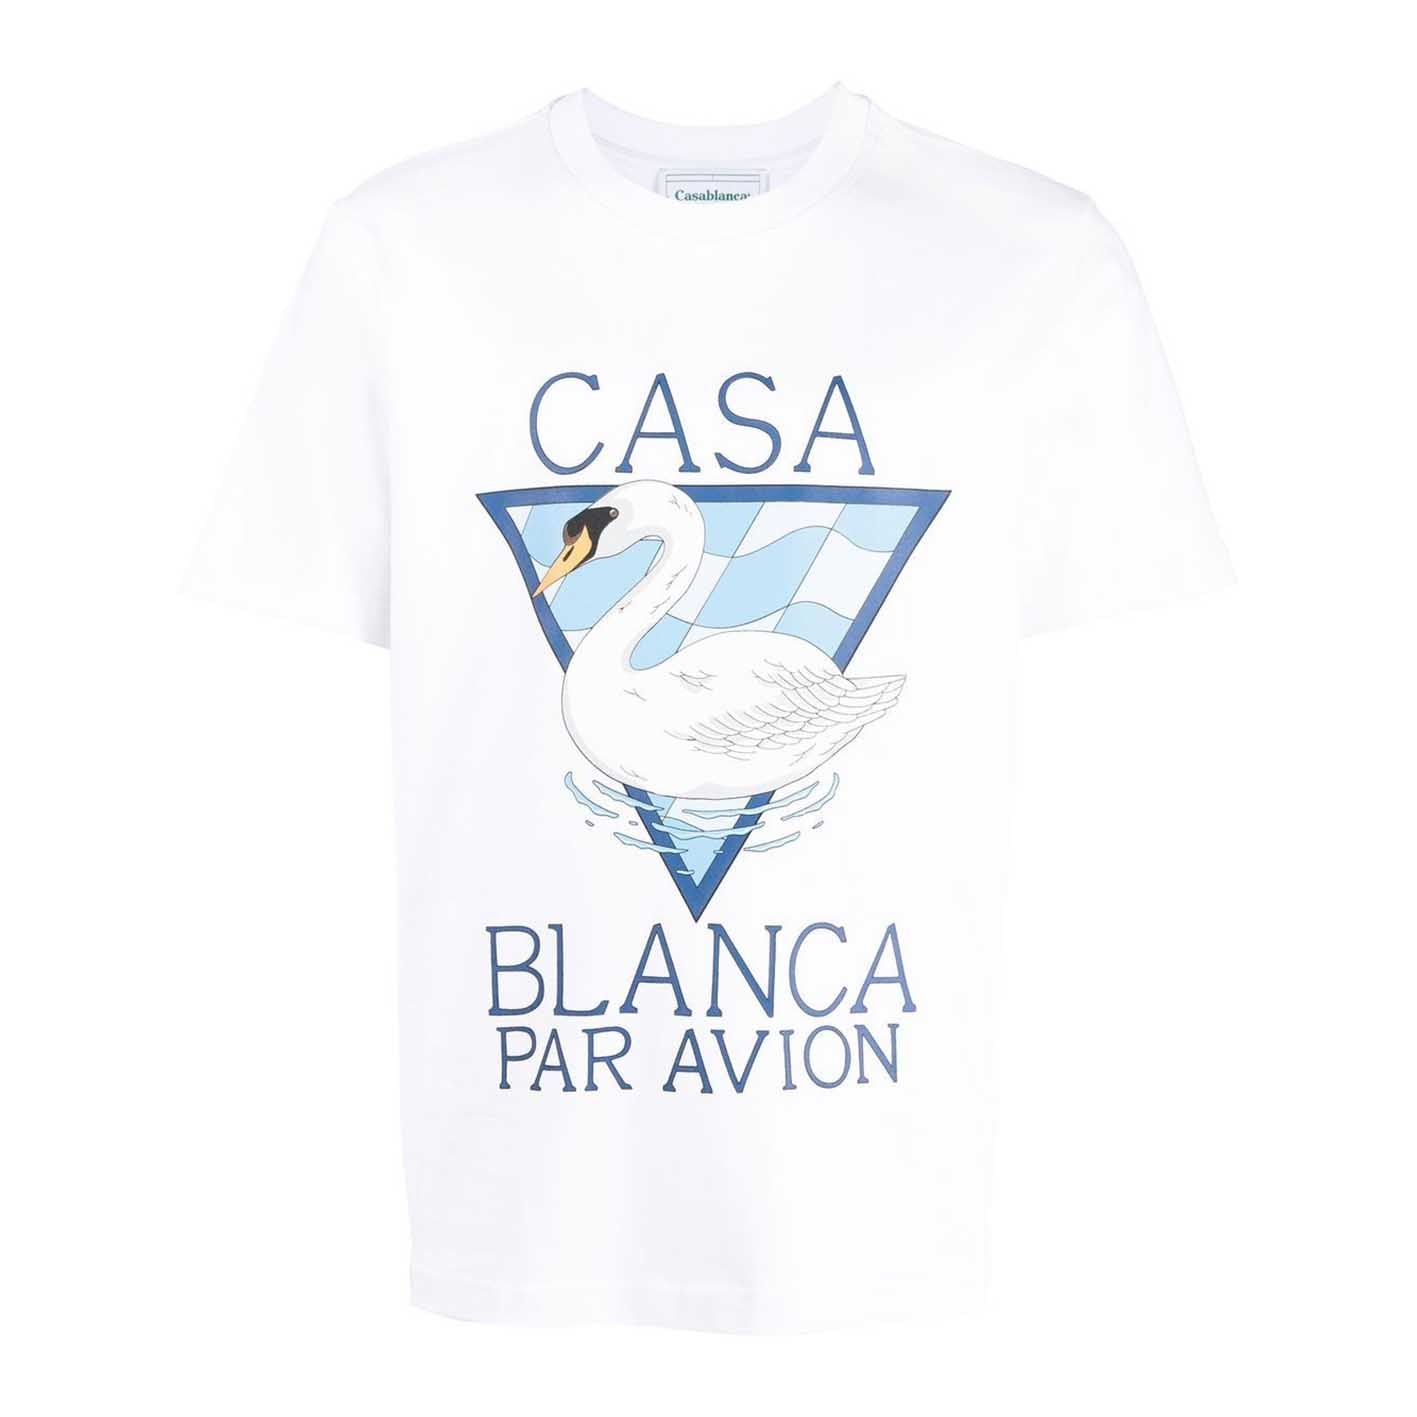 CASABLANCA PAR AVION SCREEN PRINTED T-SHIRT WHITE/BLUE